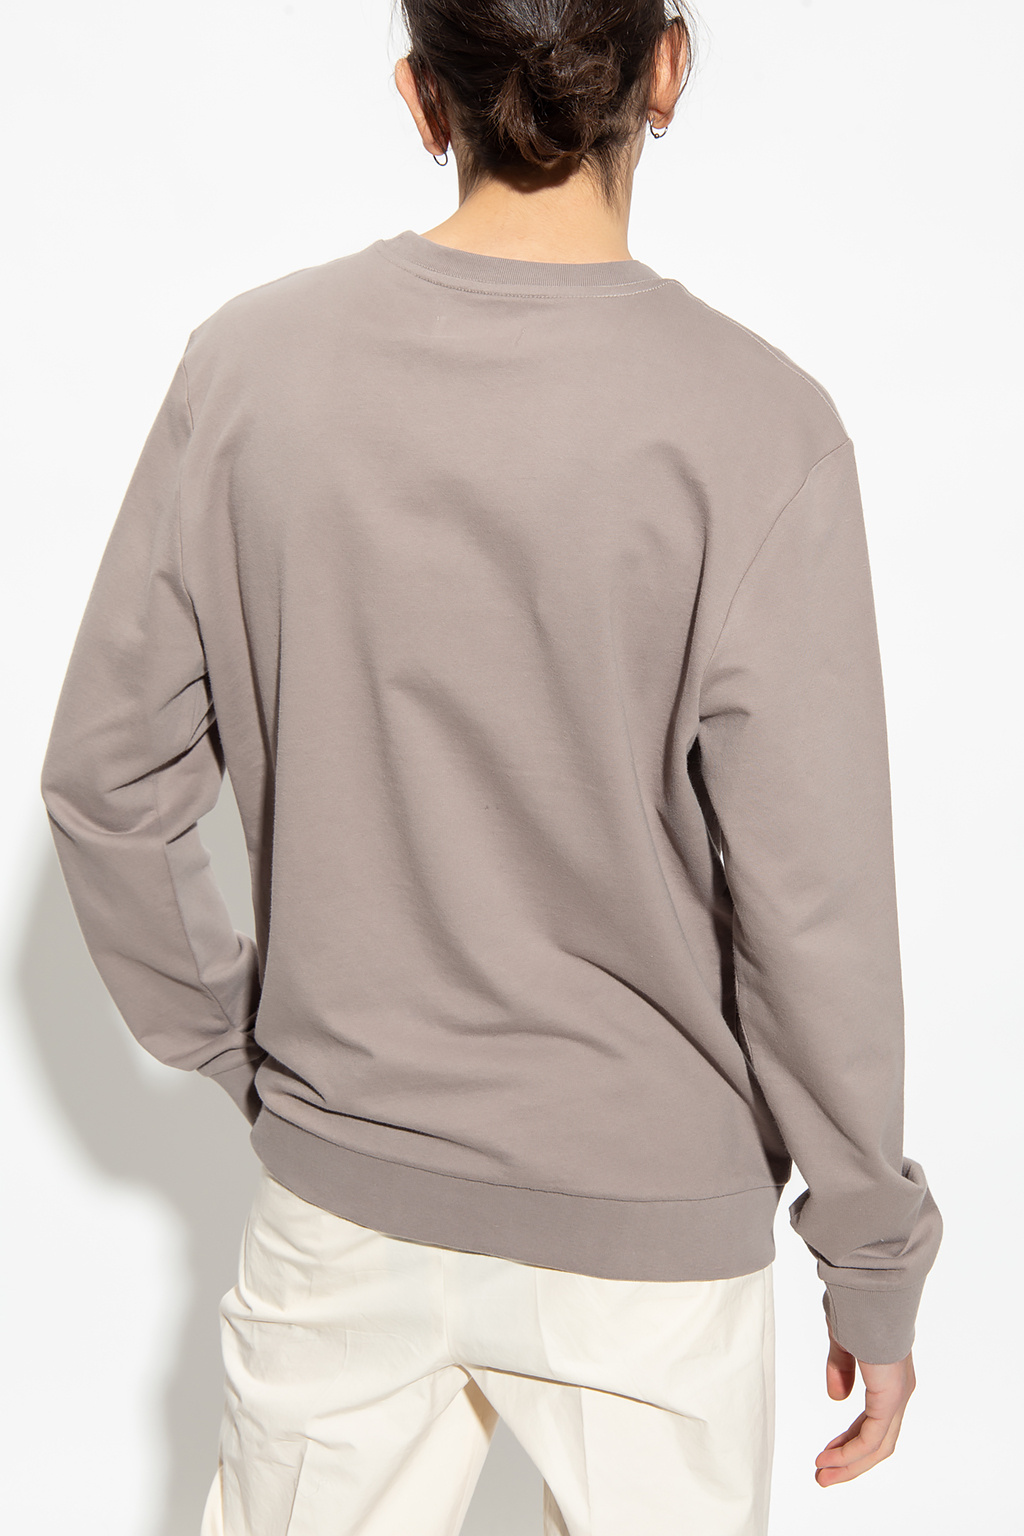 AllSaints ‘Haste’ cotton T-shirt sweatshirt